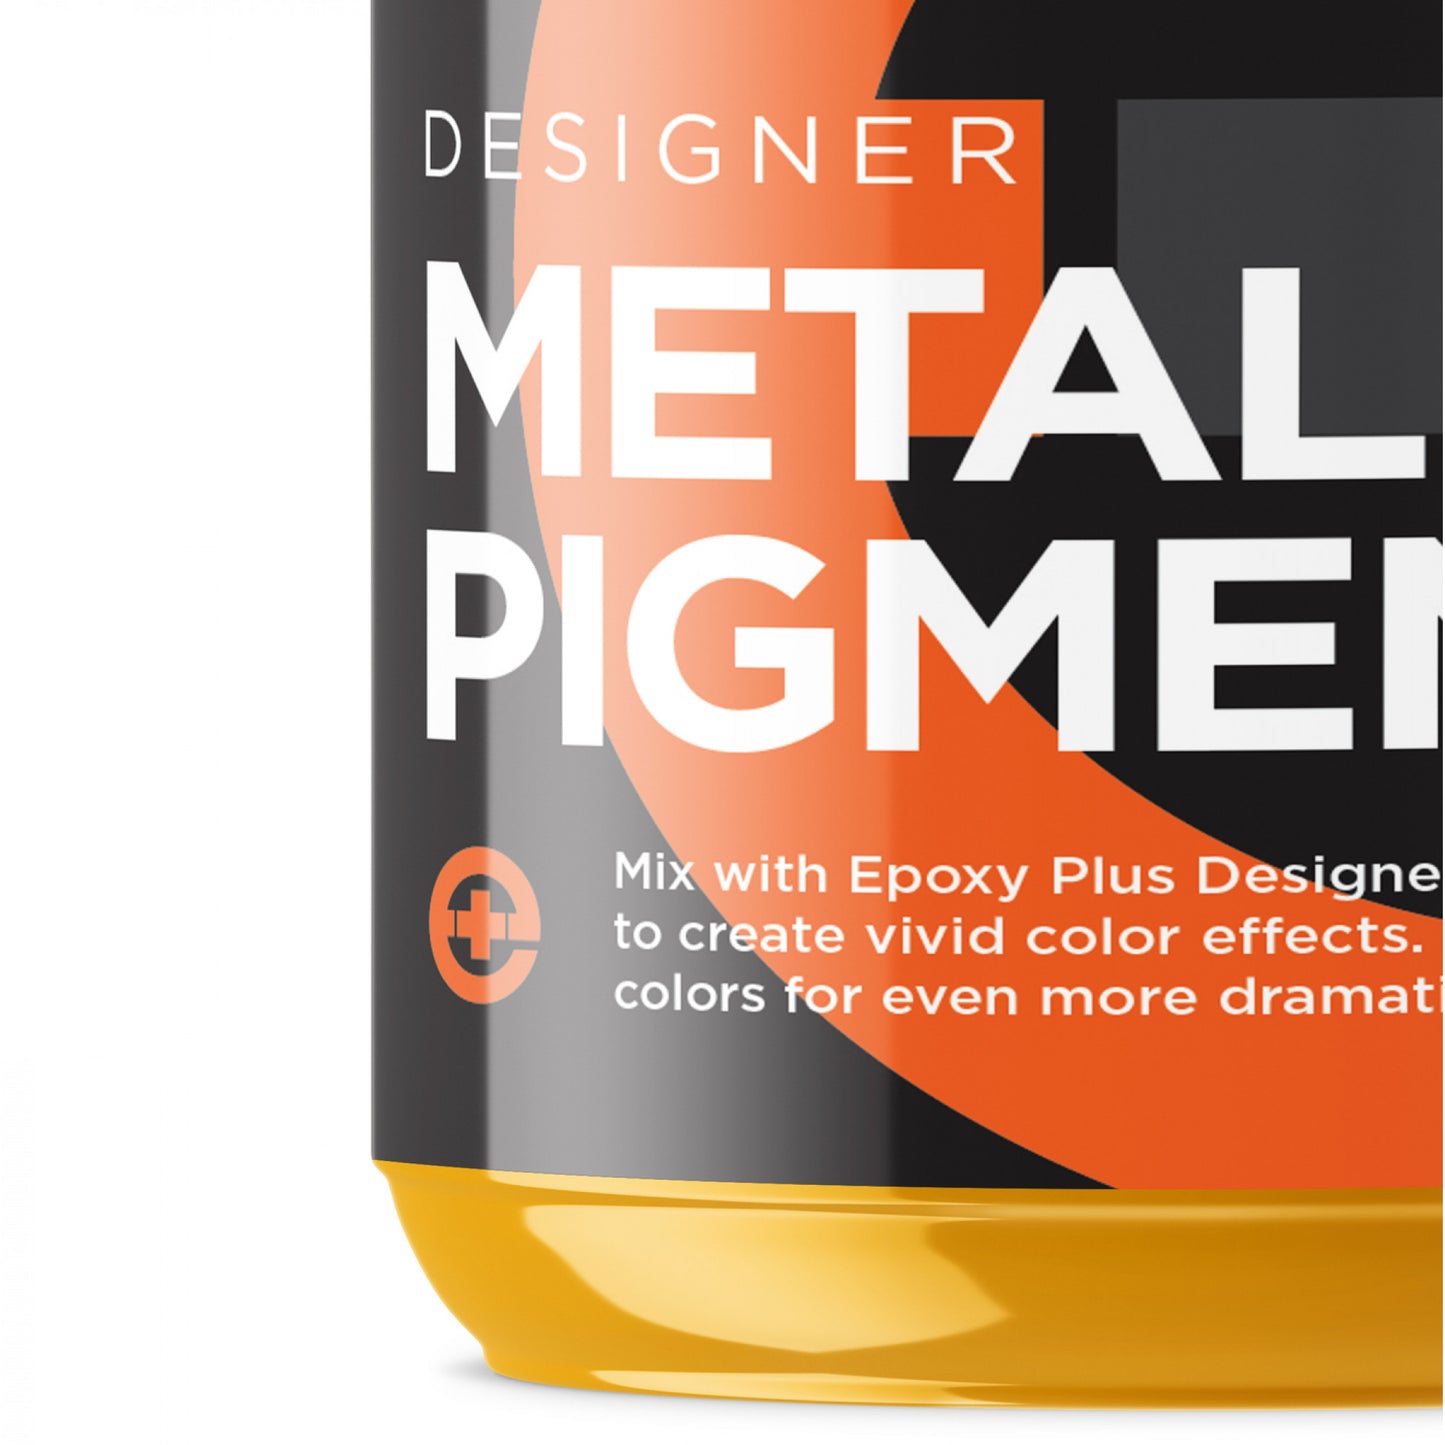 Versatile Design - Mix Canary Metallic Pigment for Custom Metallic Epoxy Shades